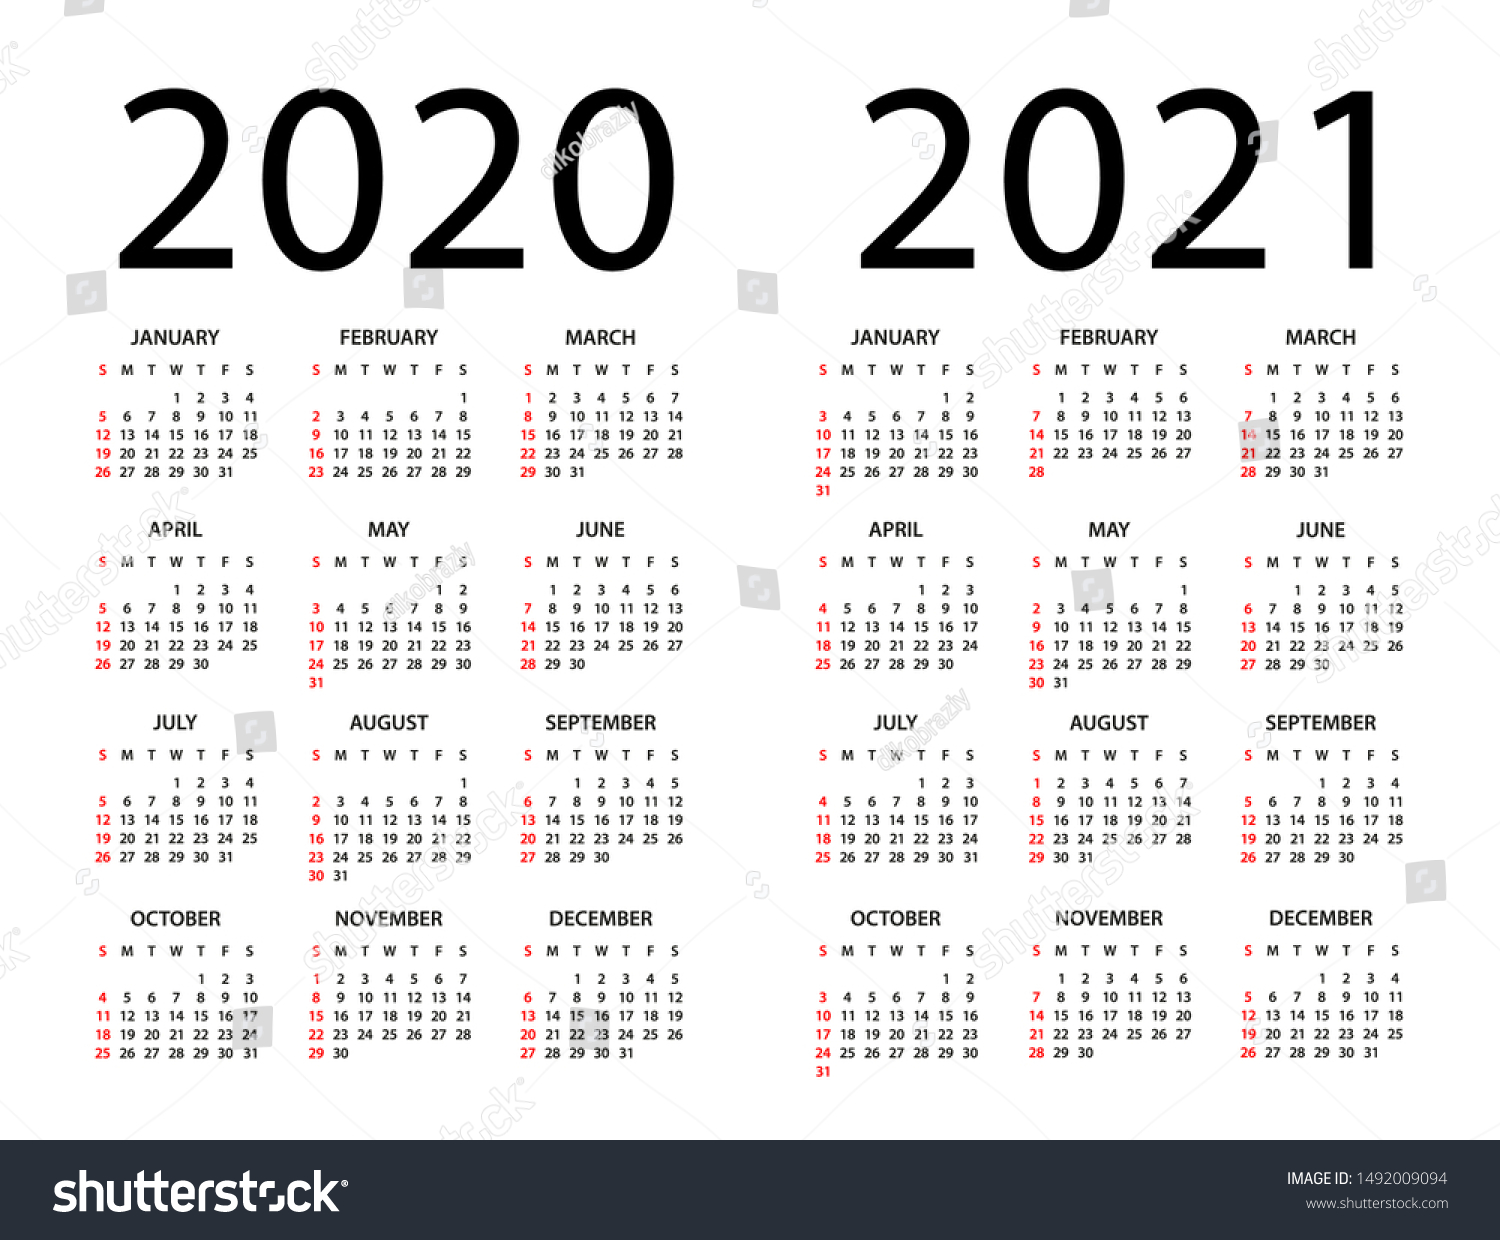 Calendar 2020 2021 year - vector illustration. Week starts on Sunday #1492009094